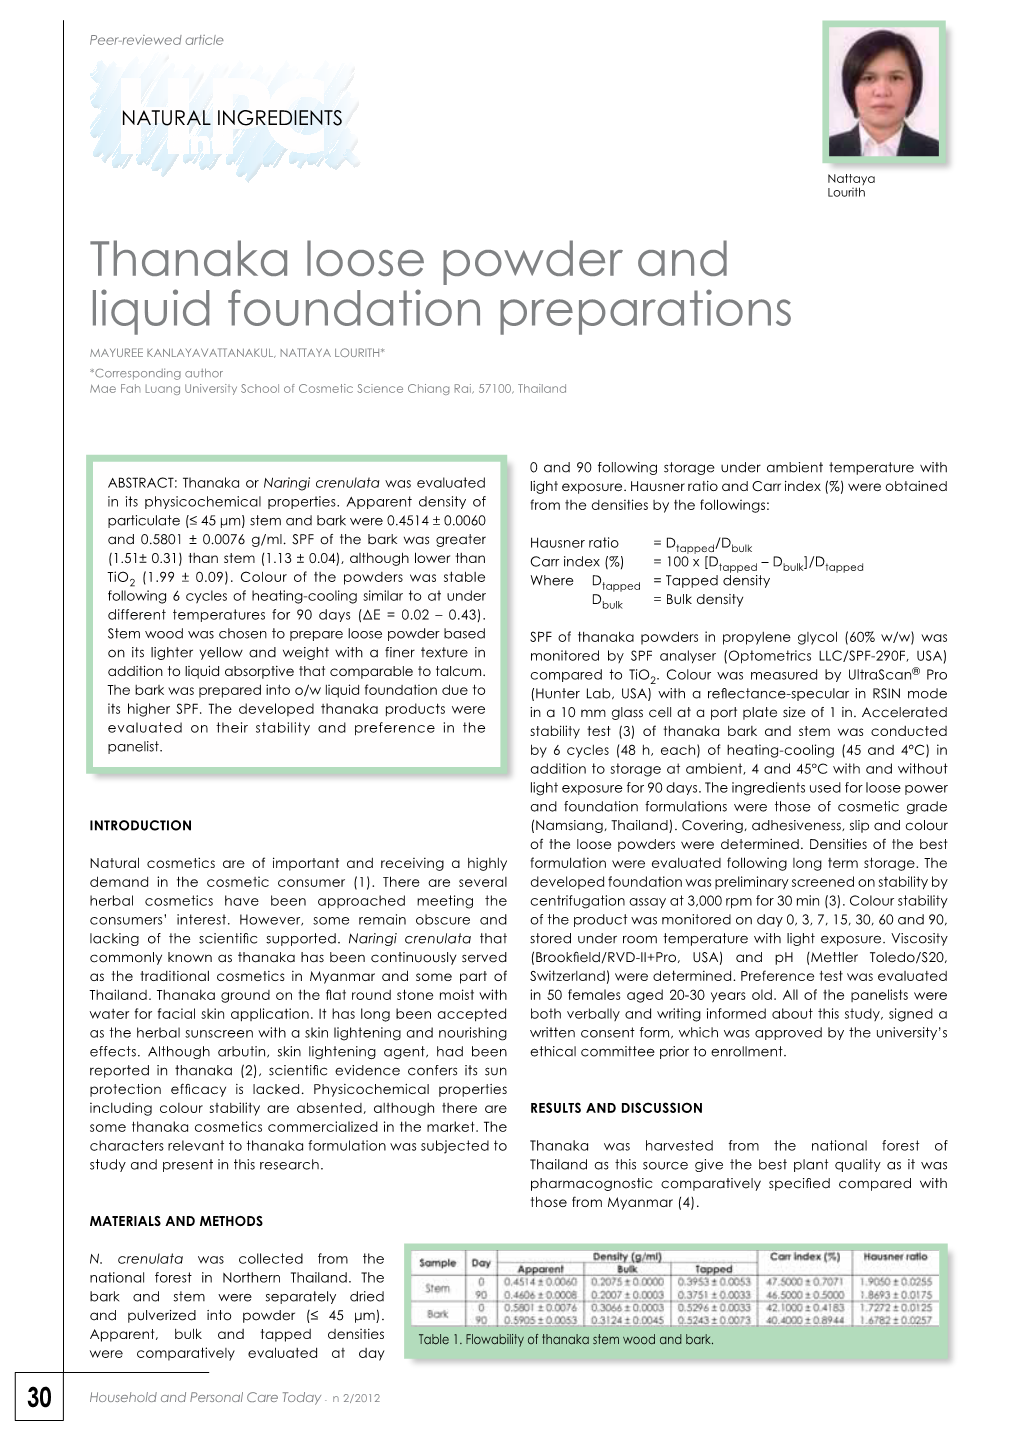 Thanaka Loose Powder and Liquid Foundation Preparations